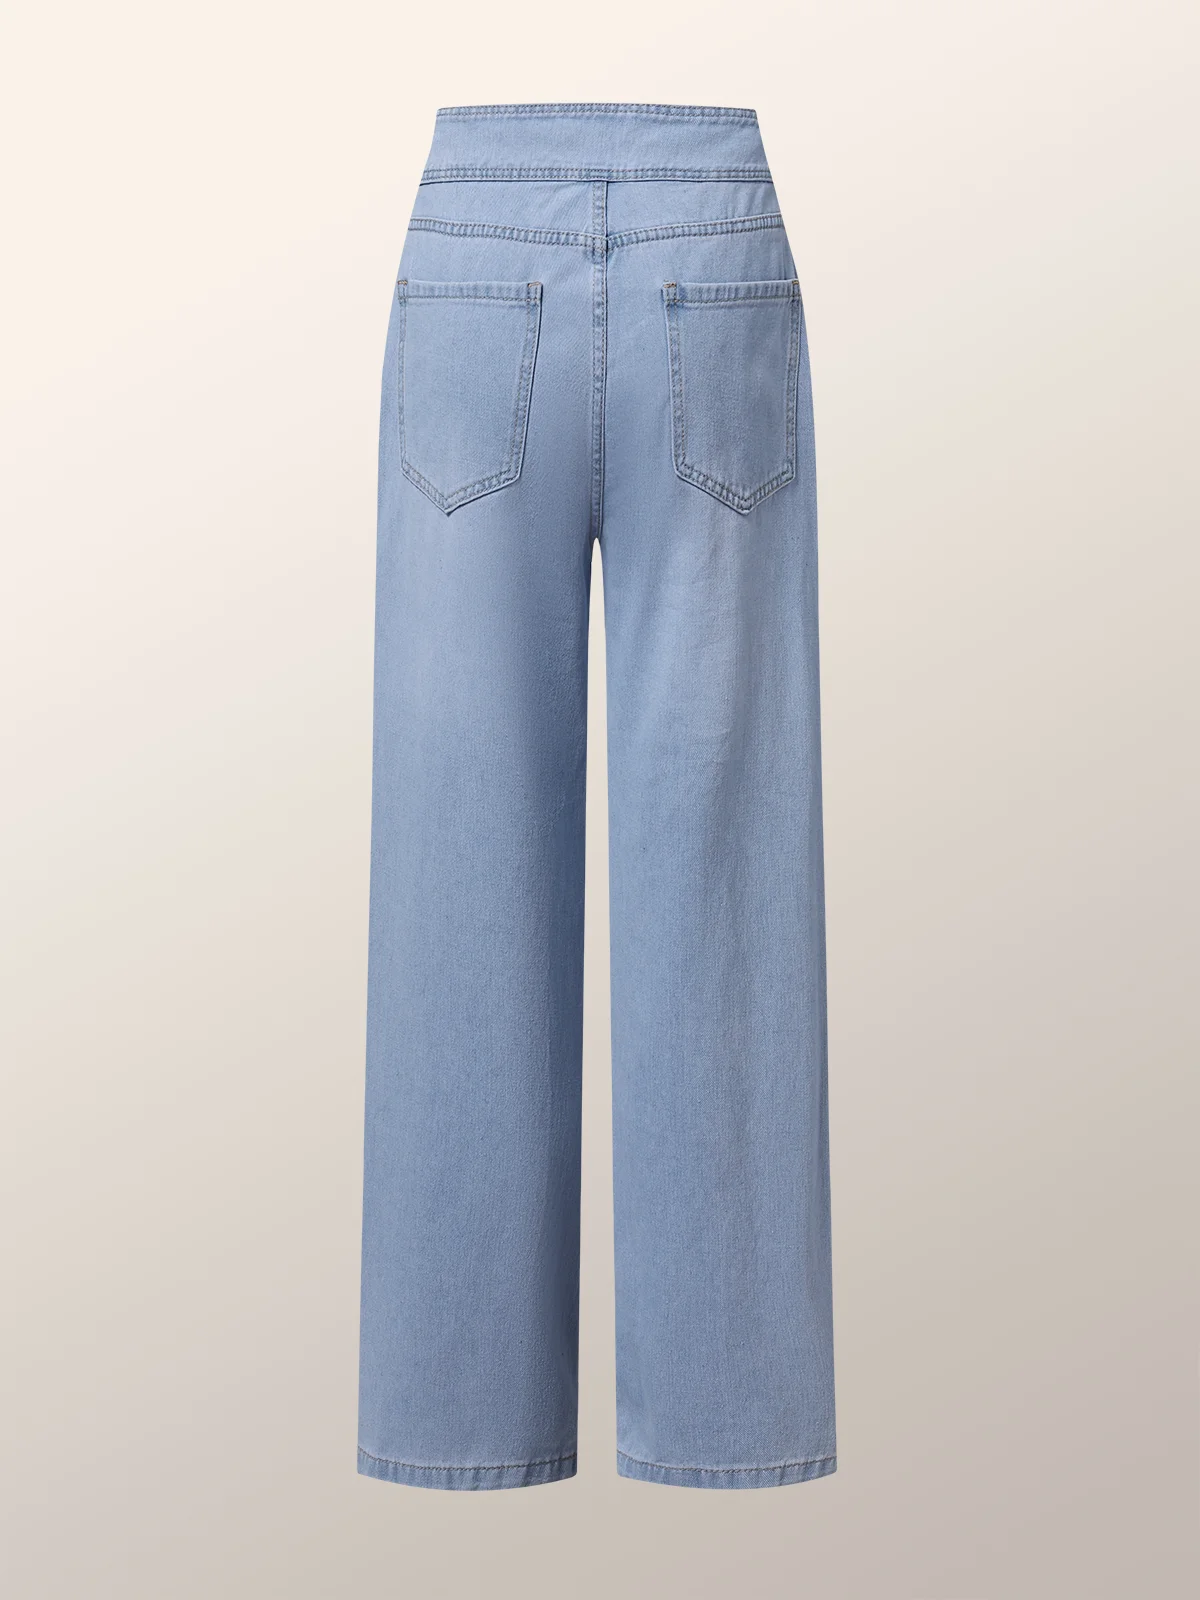 Daily Denim Plain Casual Regular Fit Jeans